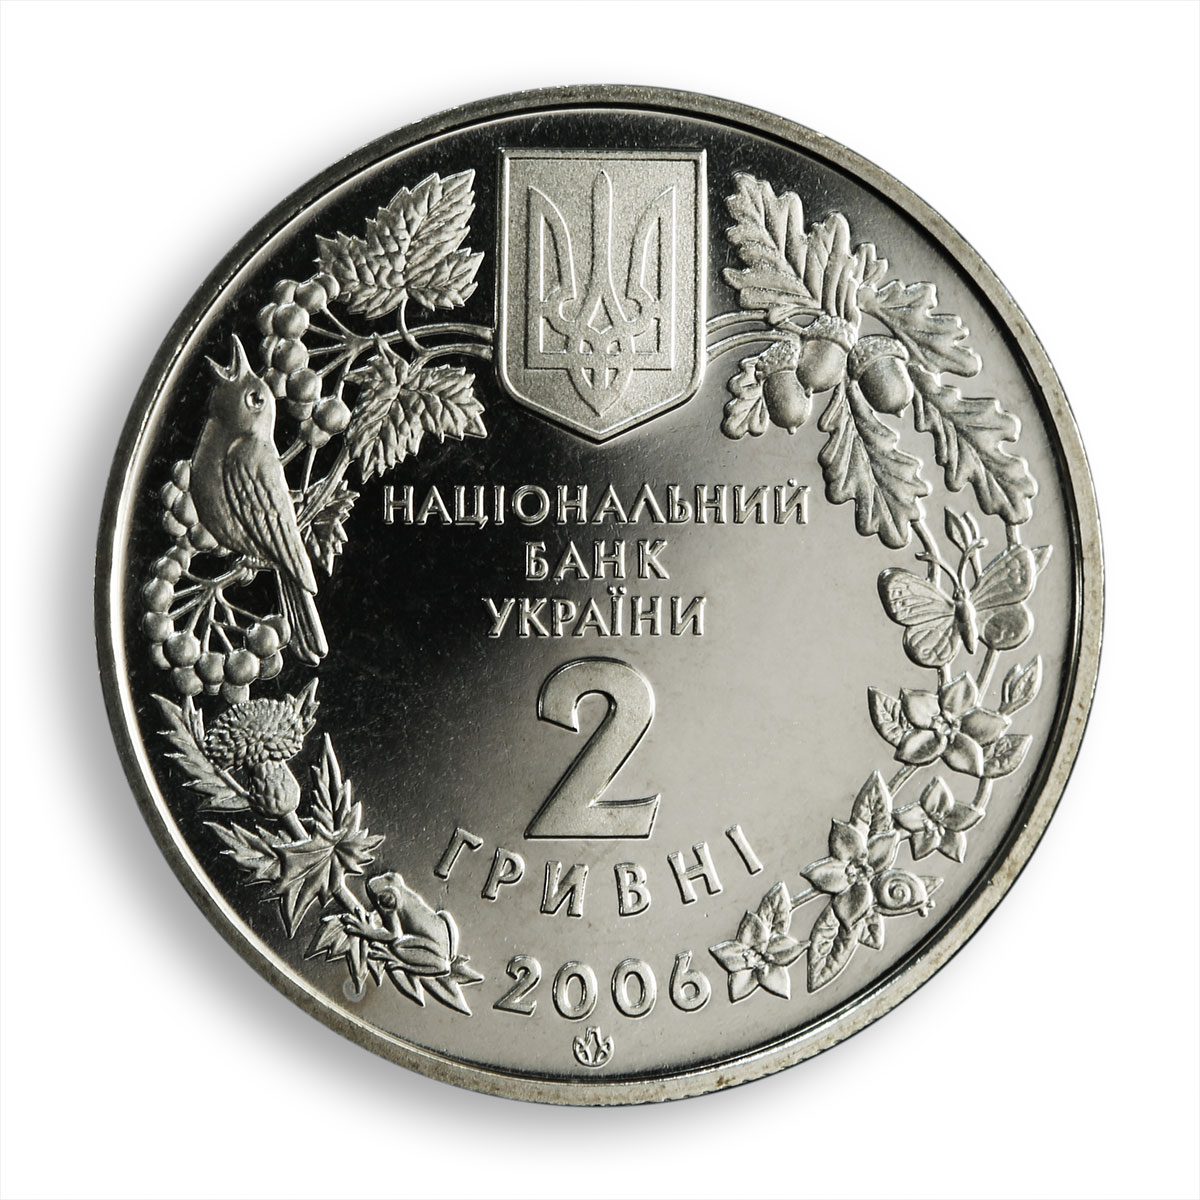 Ukraine 2 hryvnia Bush Cricket Poecilimon ukrainicus grasshopper CuNi coin 2006